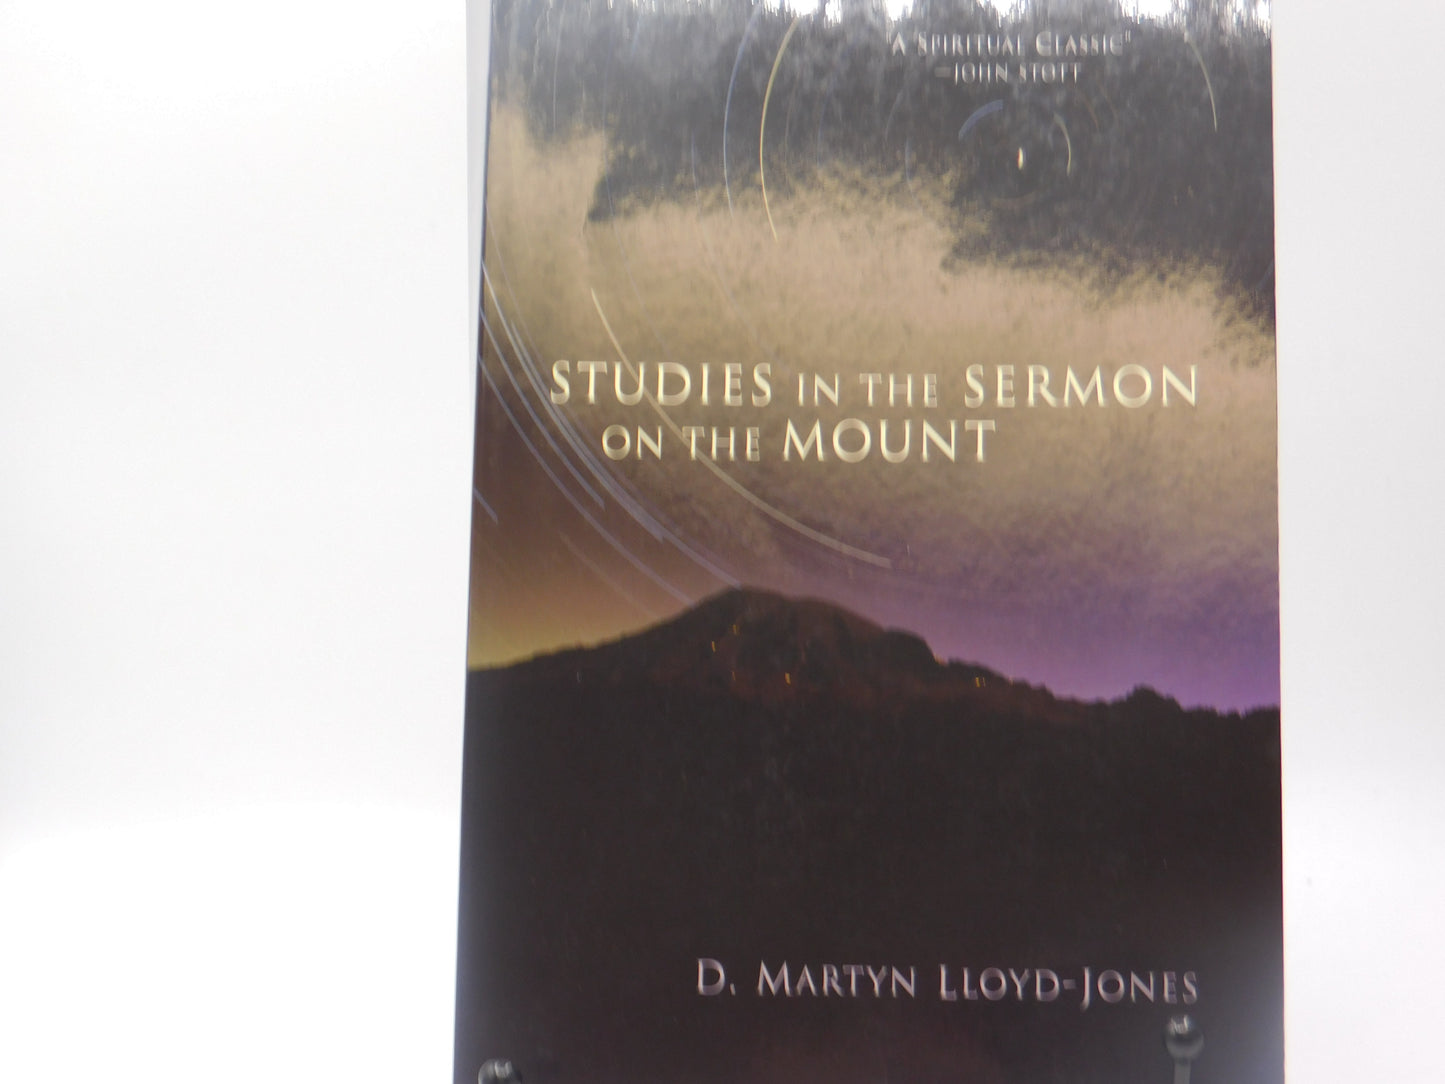 Studies in the Sermon on the Mount by David Martyn Llyod-Jones